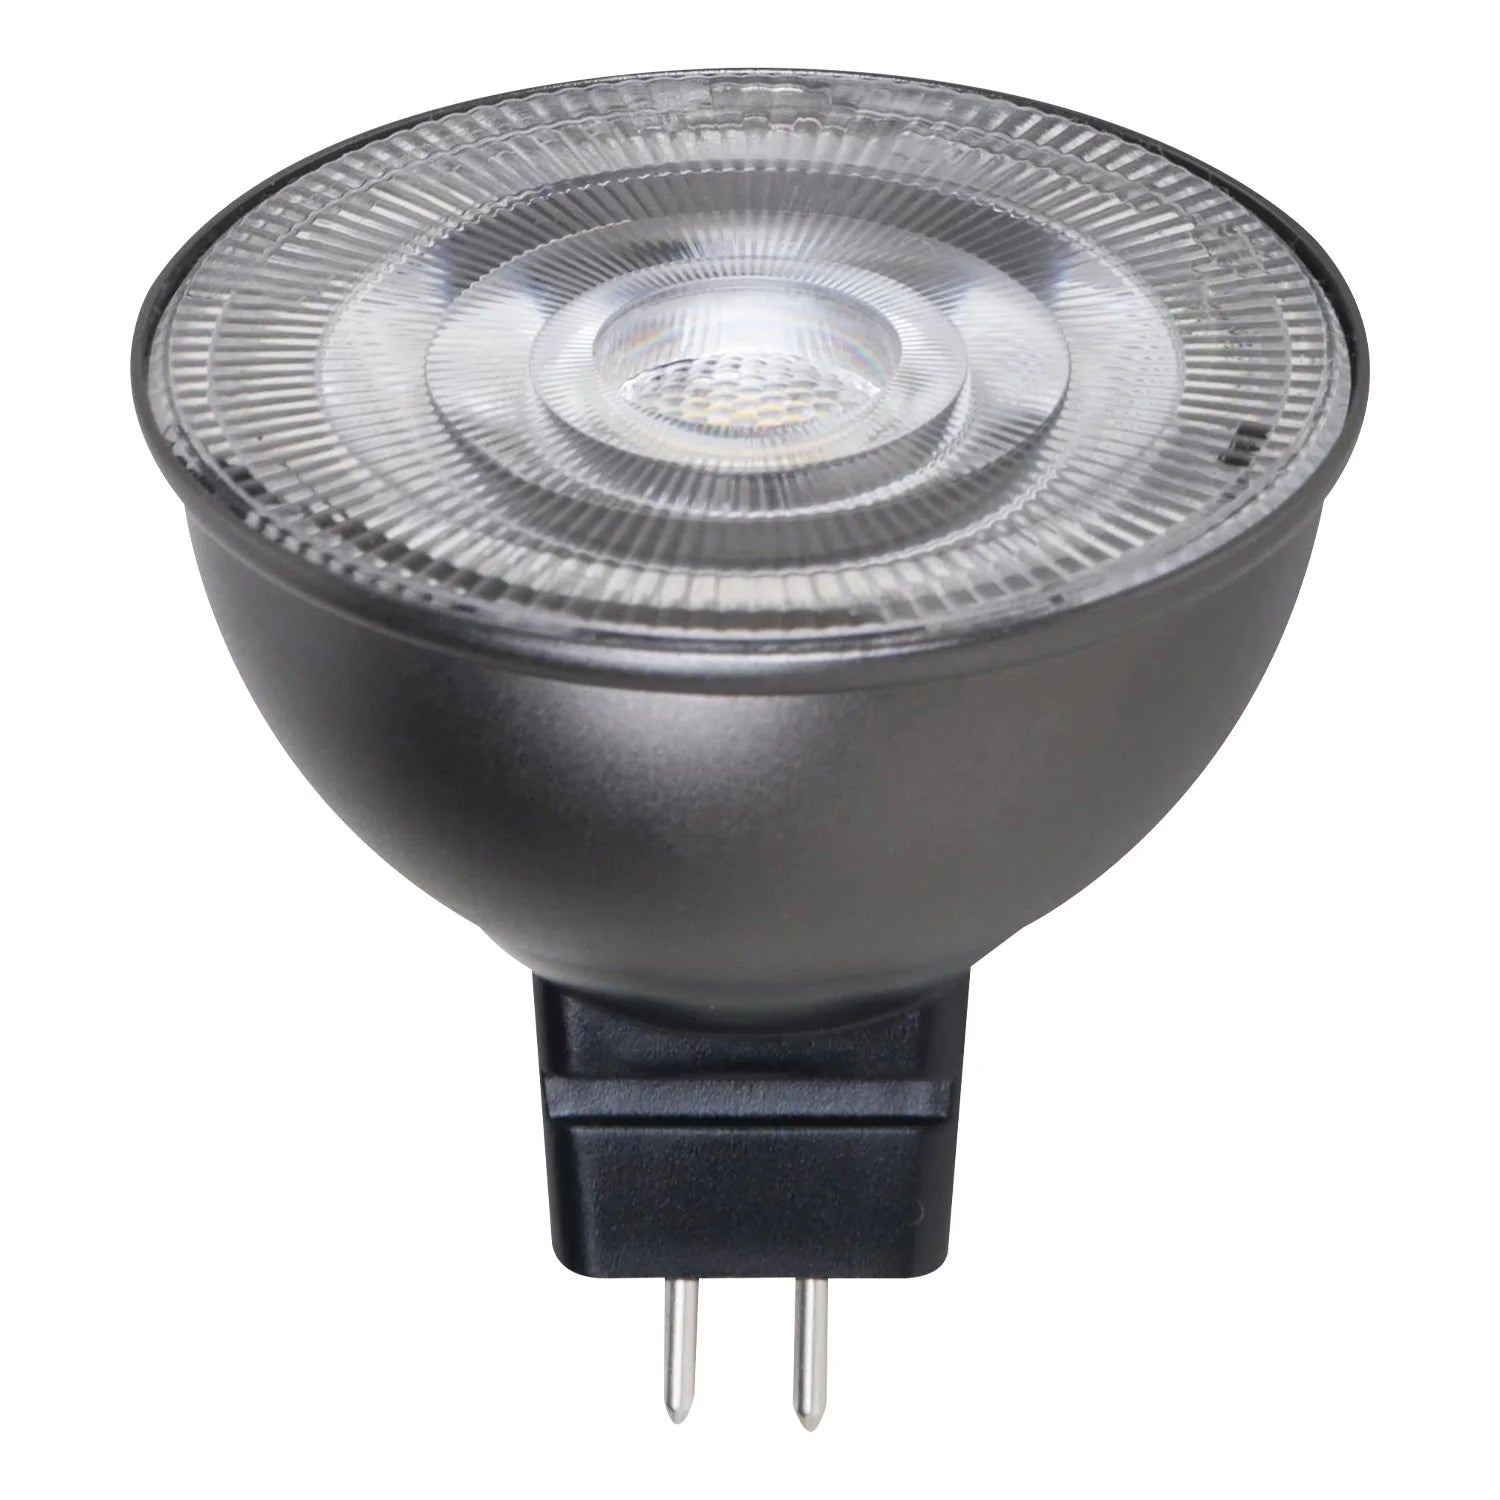 LED 7watt MR16 3000K warm white 40° flood light bulb low voltage dimmable